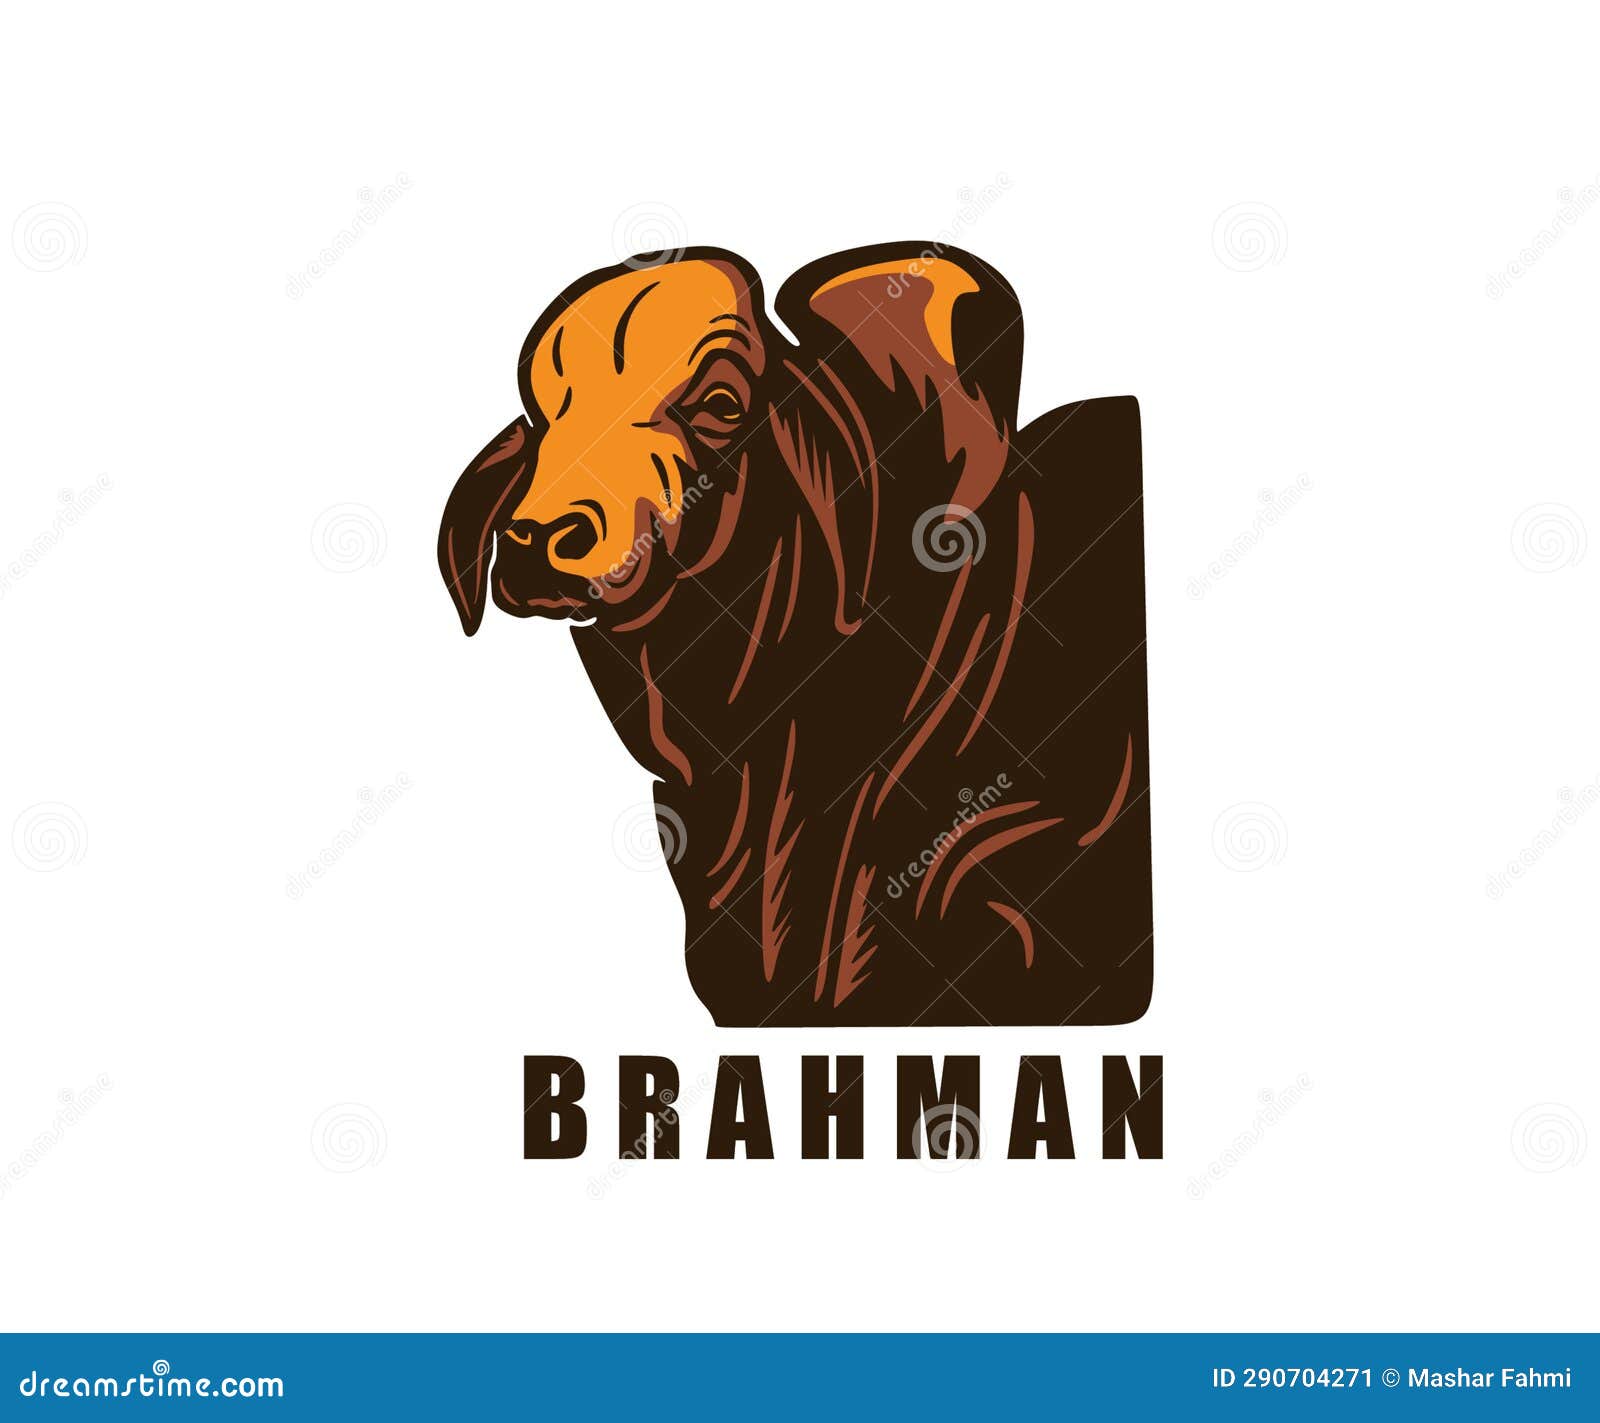 Brahman Journal - Crunchbase Company Profile & Funding